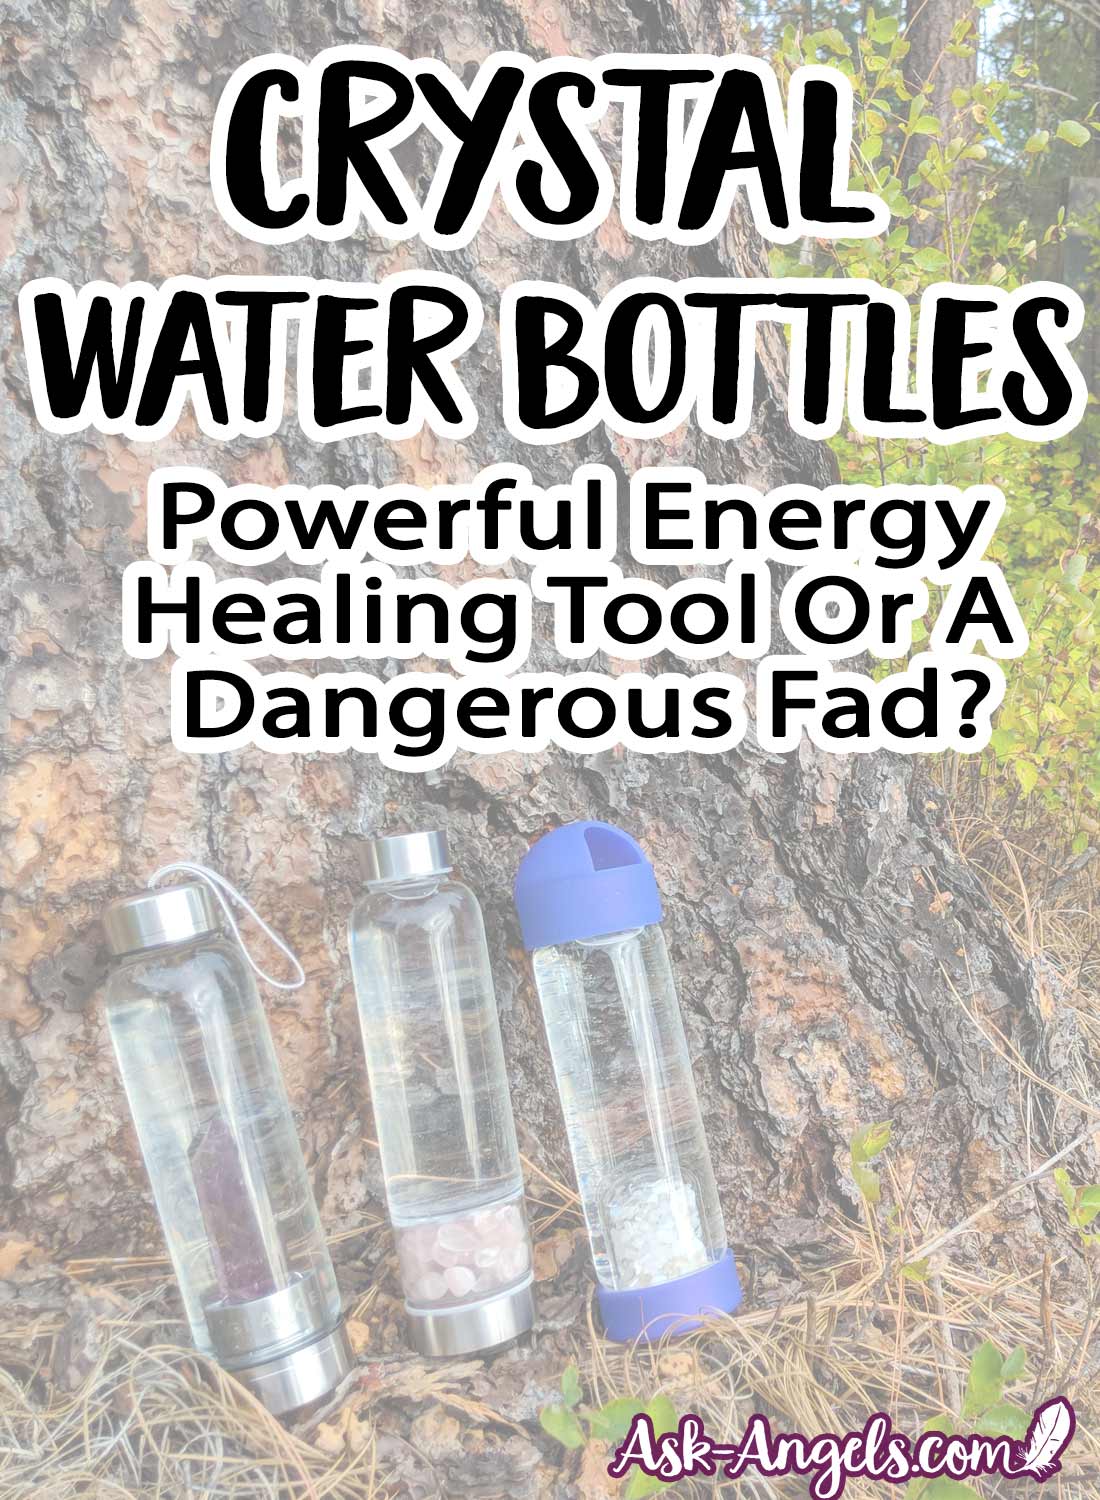 Crystal Water Bottles - Powerful Healing Energy or a Dangerous Fad?